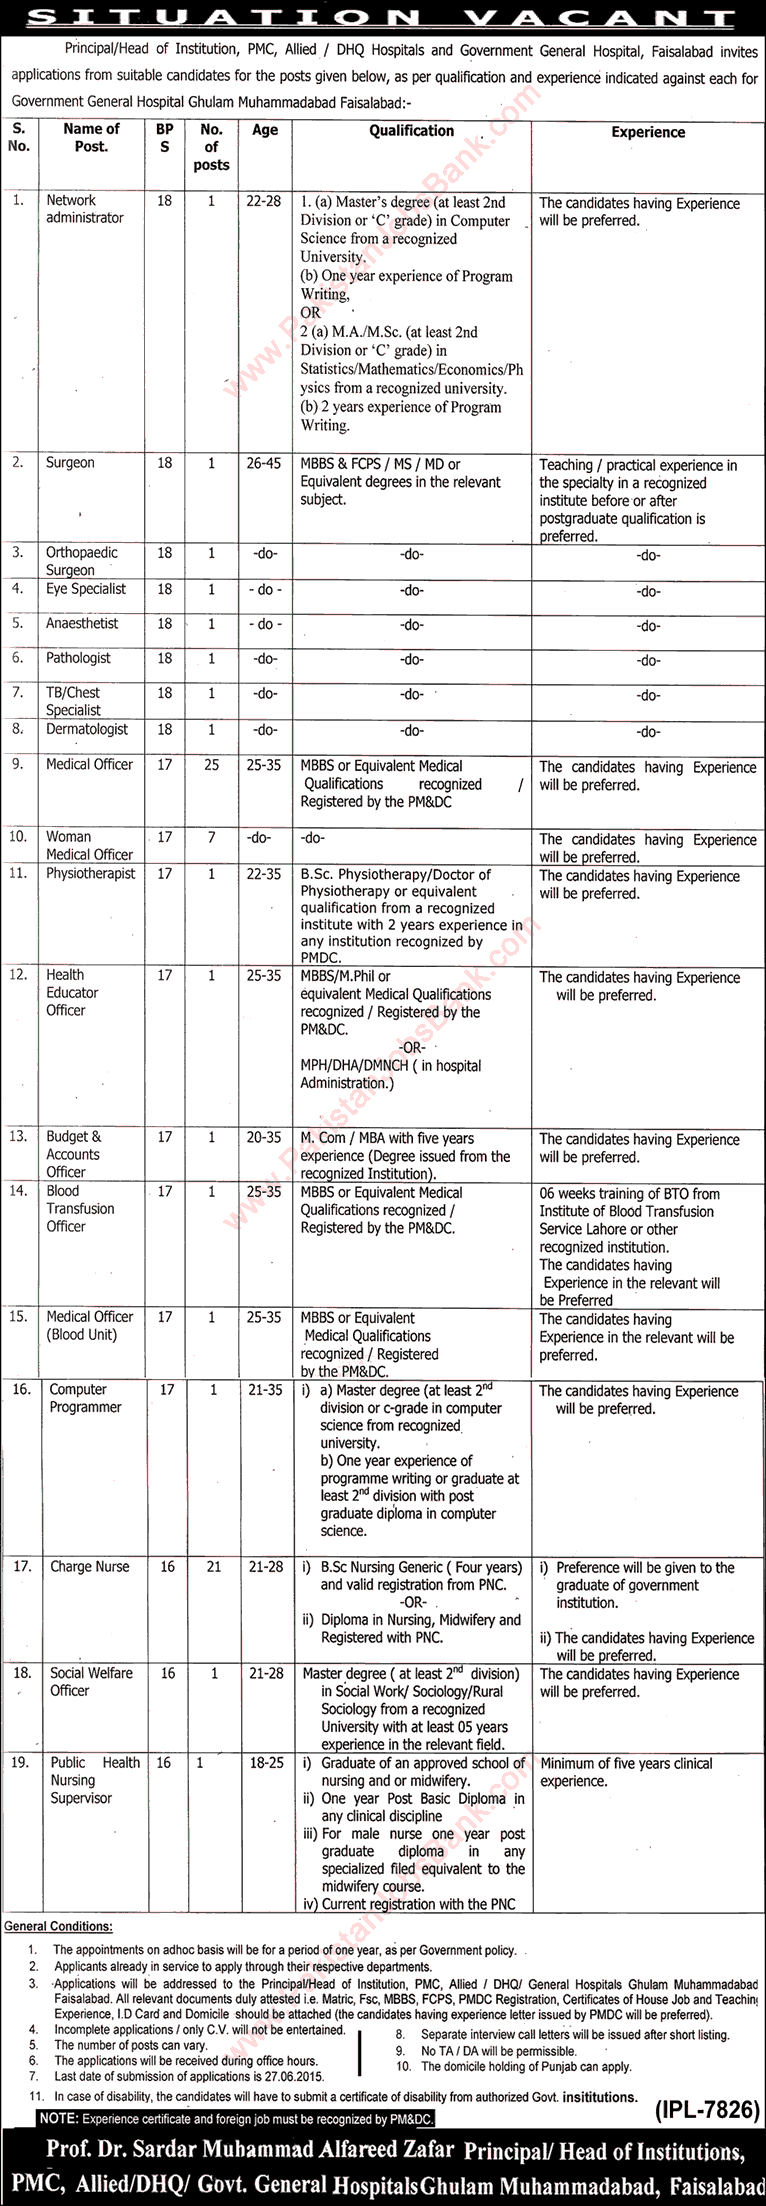 Government General Hospital Faisalabad Jobs 2015 June Medical Officers / Specialists, Nurses & Admin Staff